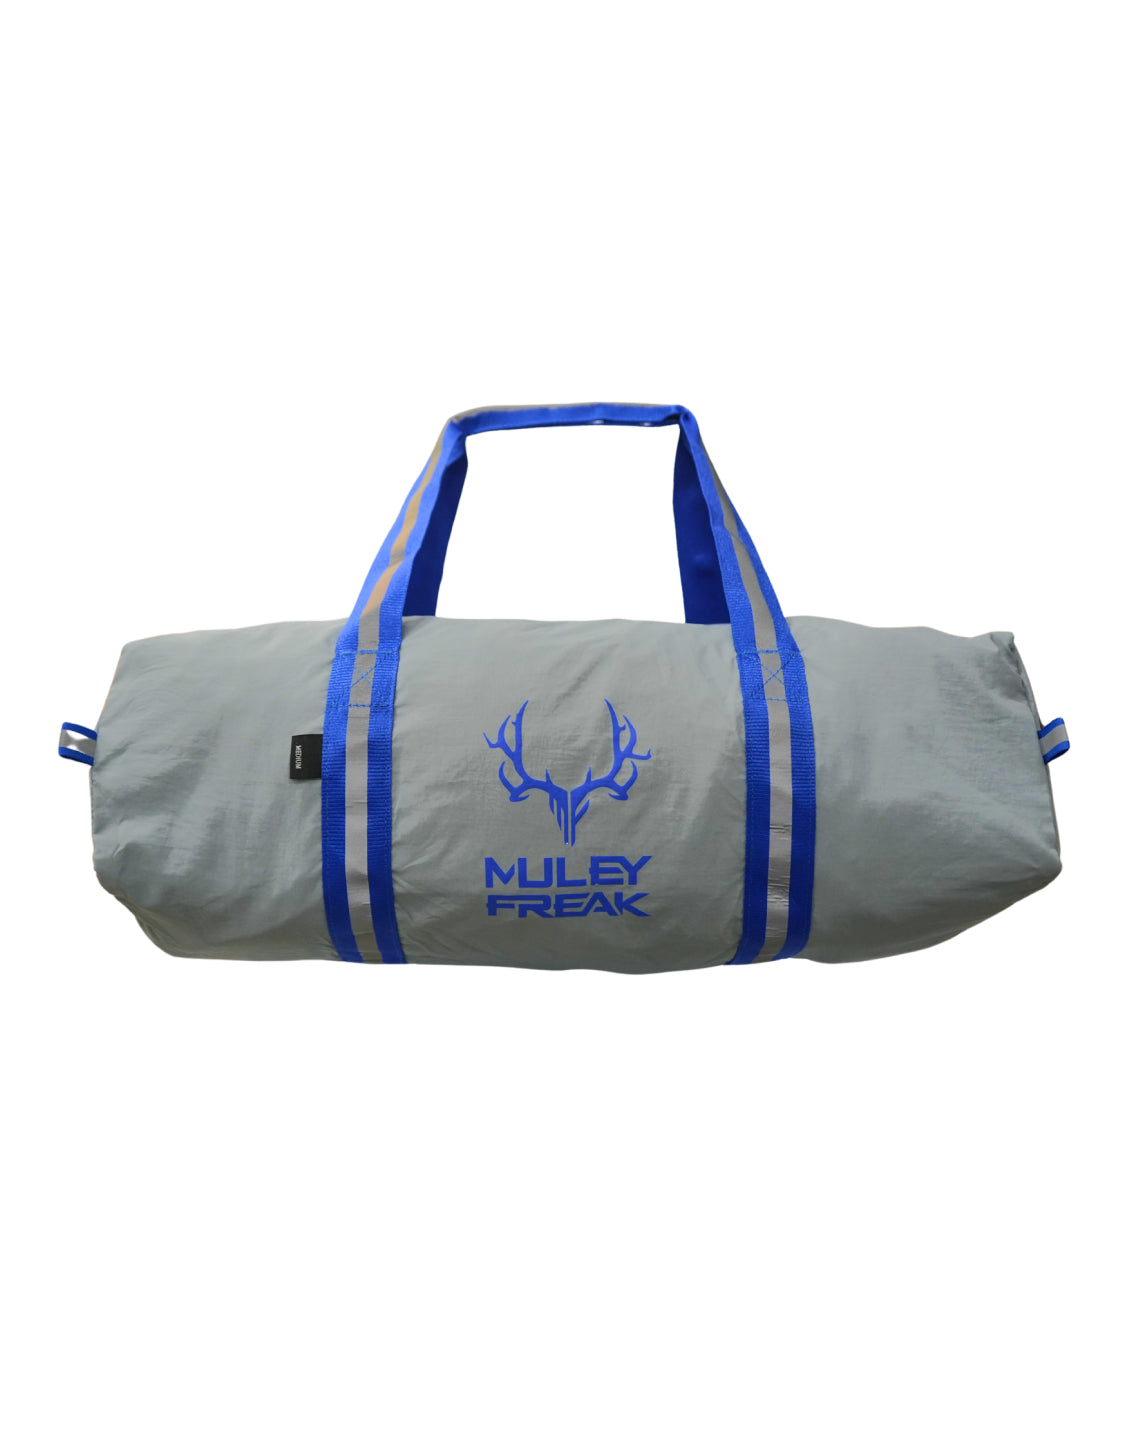 Durable Muley Freak loose meat duffle bag with sturdy YKK zipper.